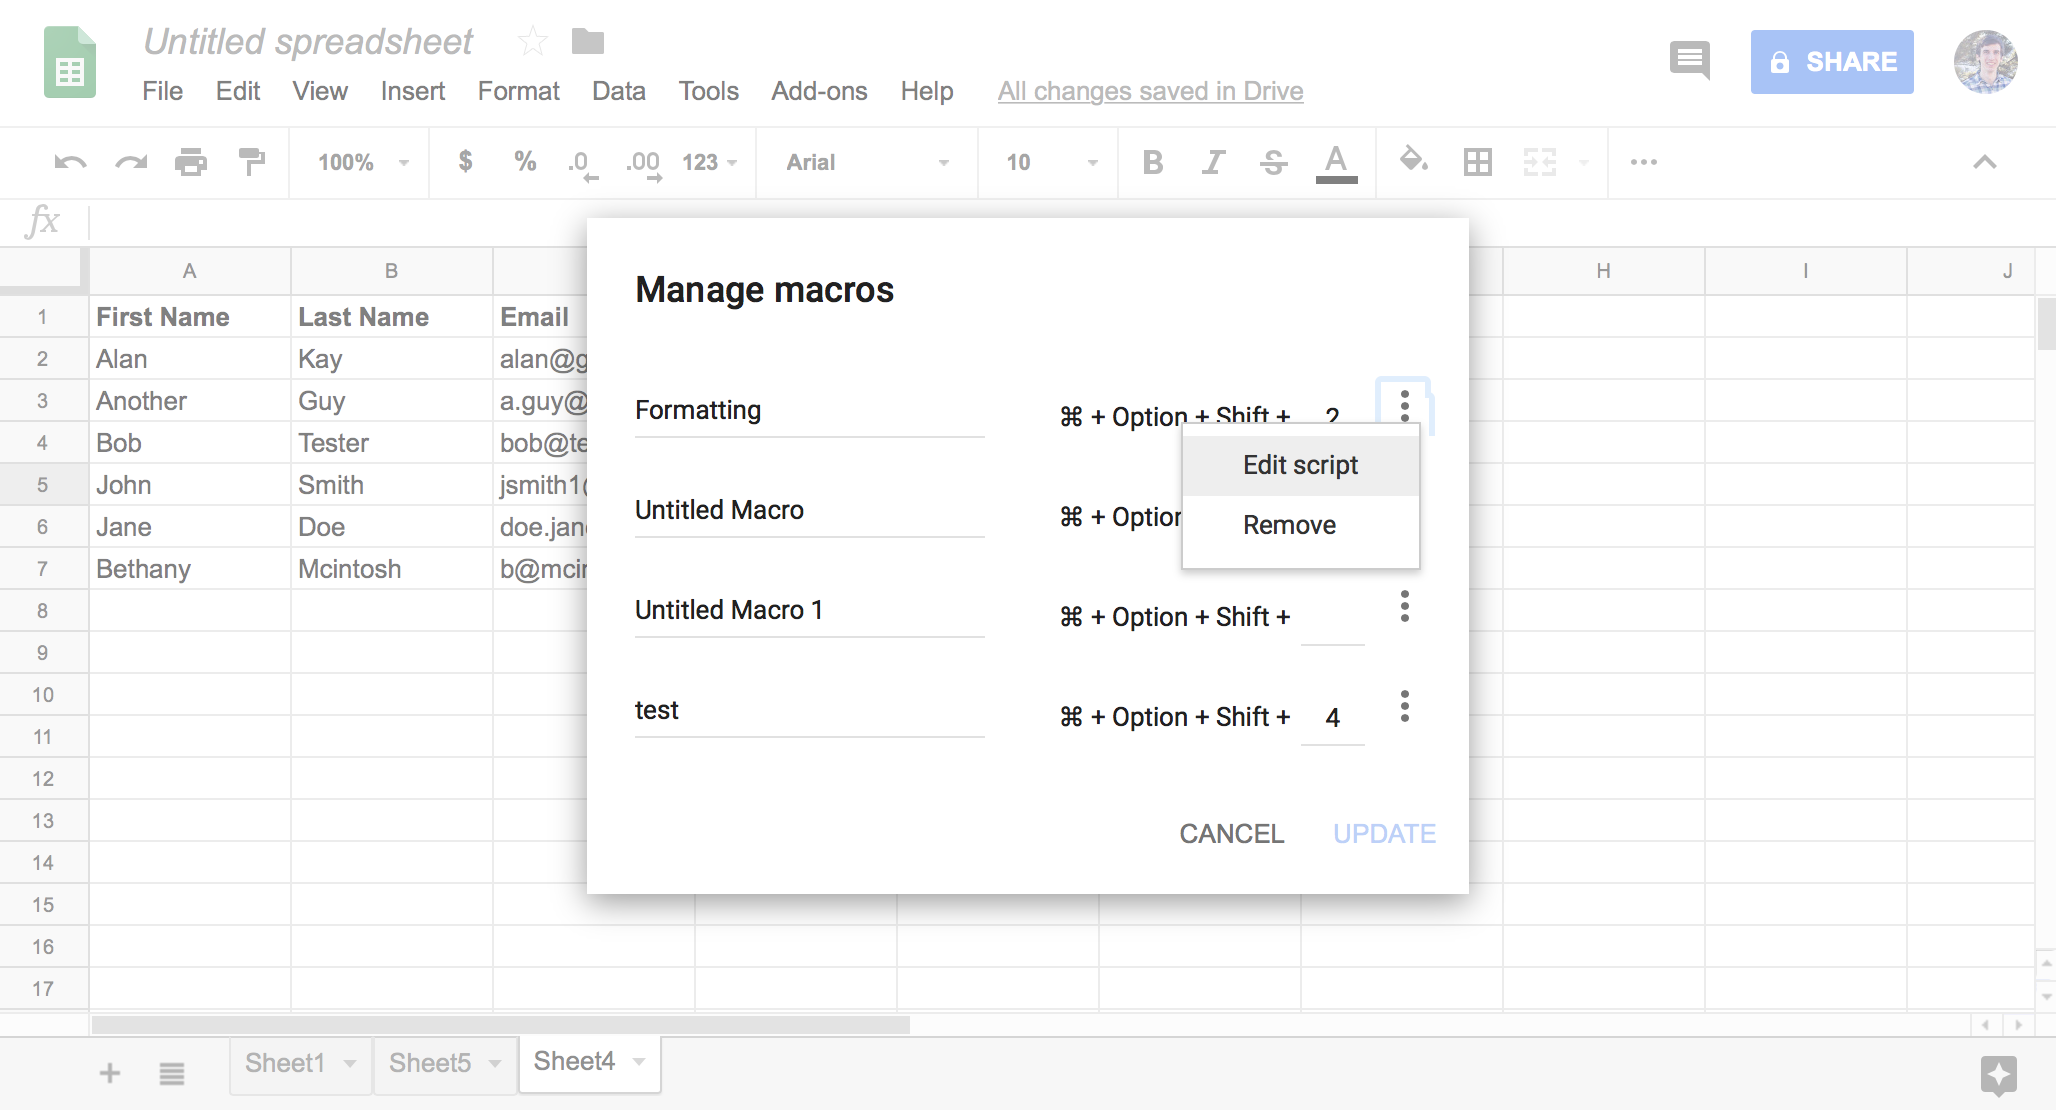 Can we create macro in Google Sheets?